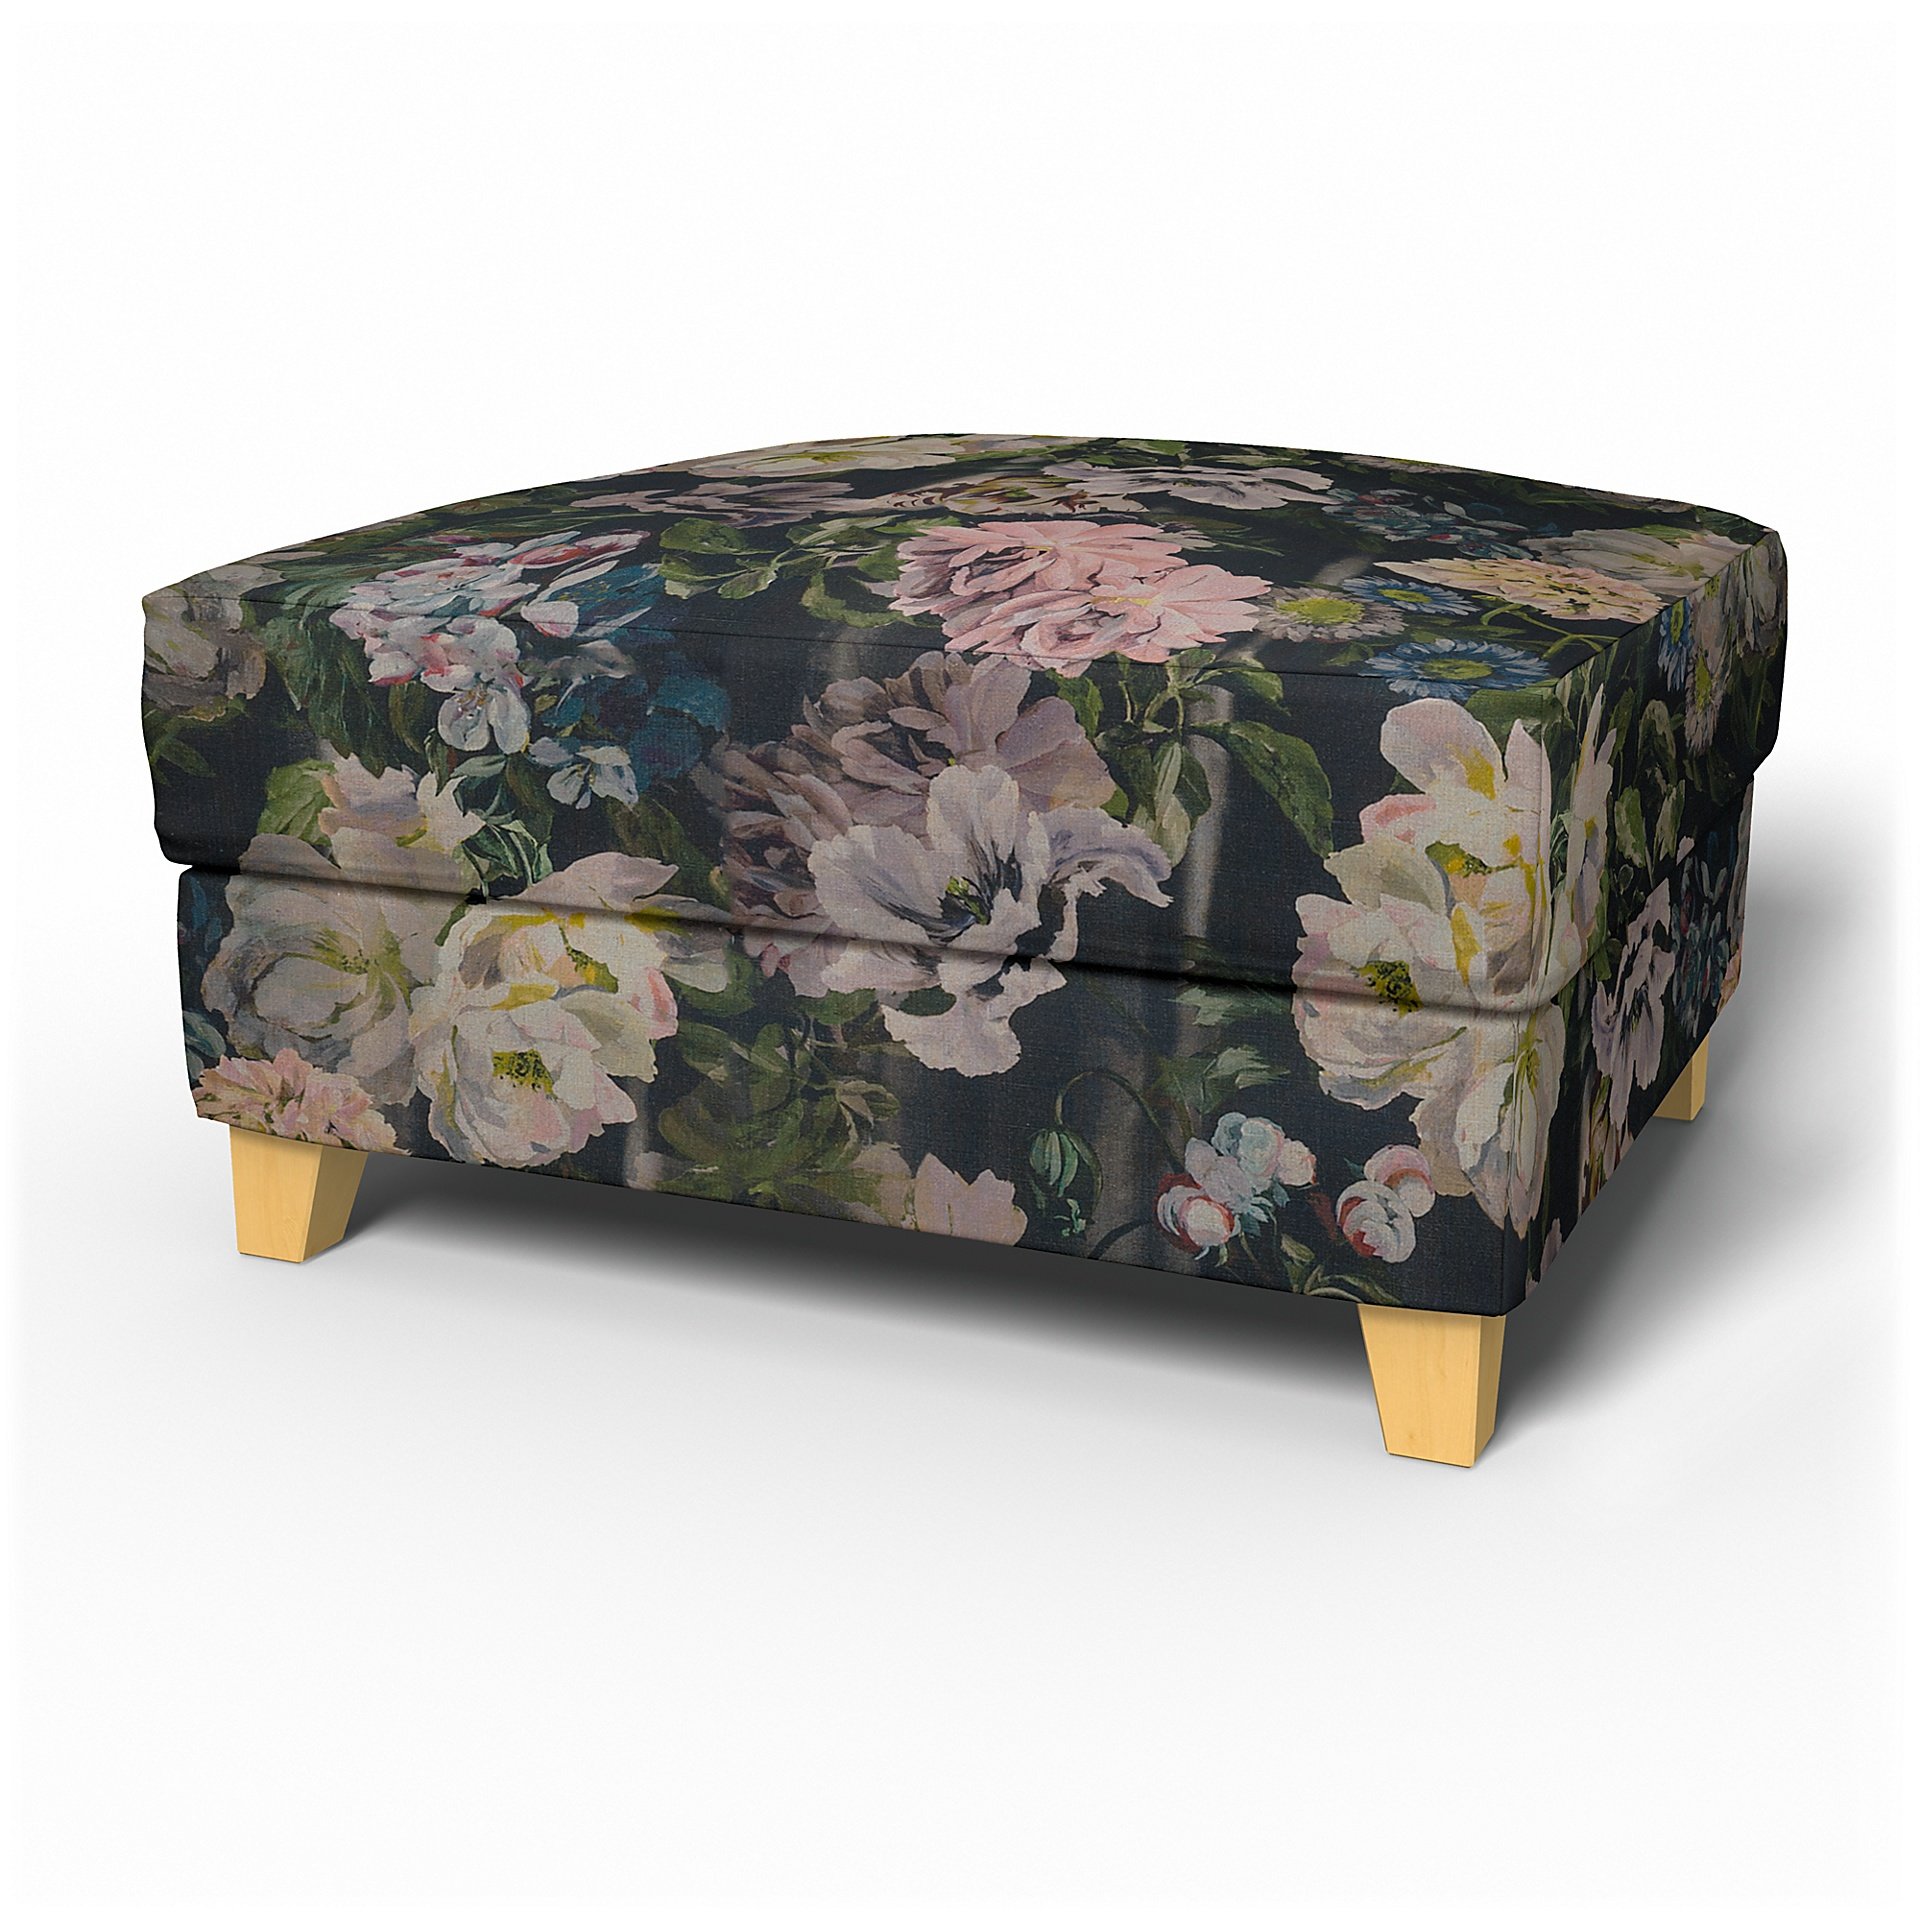 IKEA - Backa Footstool Cover, Delft Flower - Graphite, Linen - Bemz